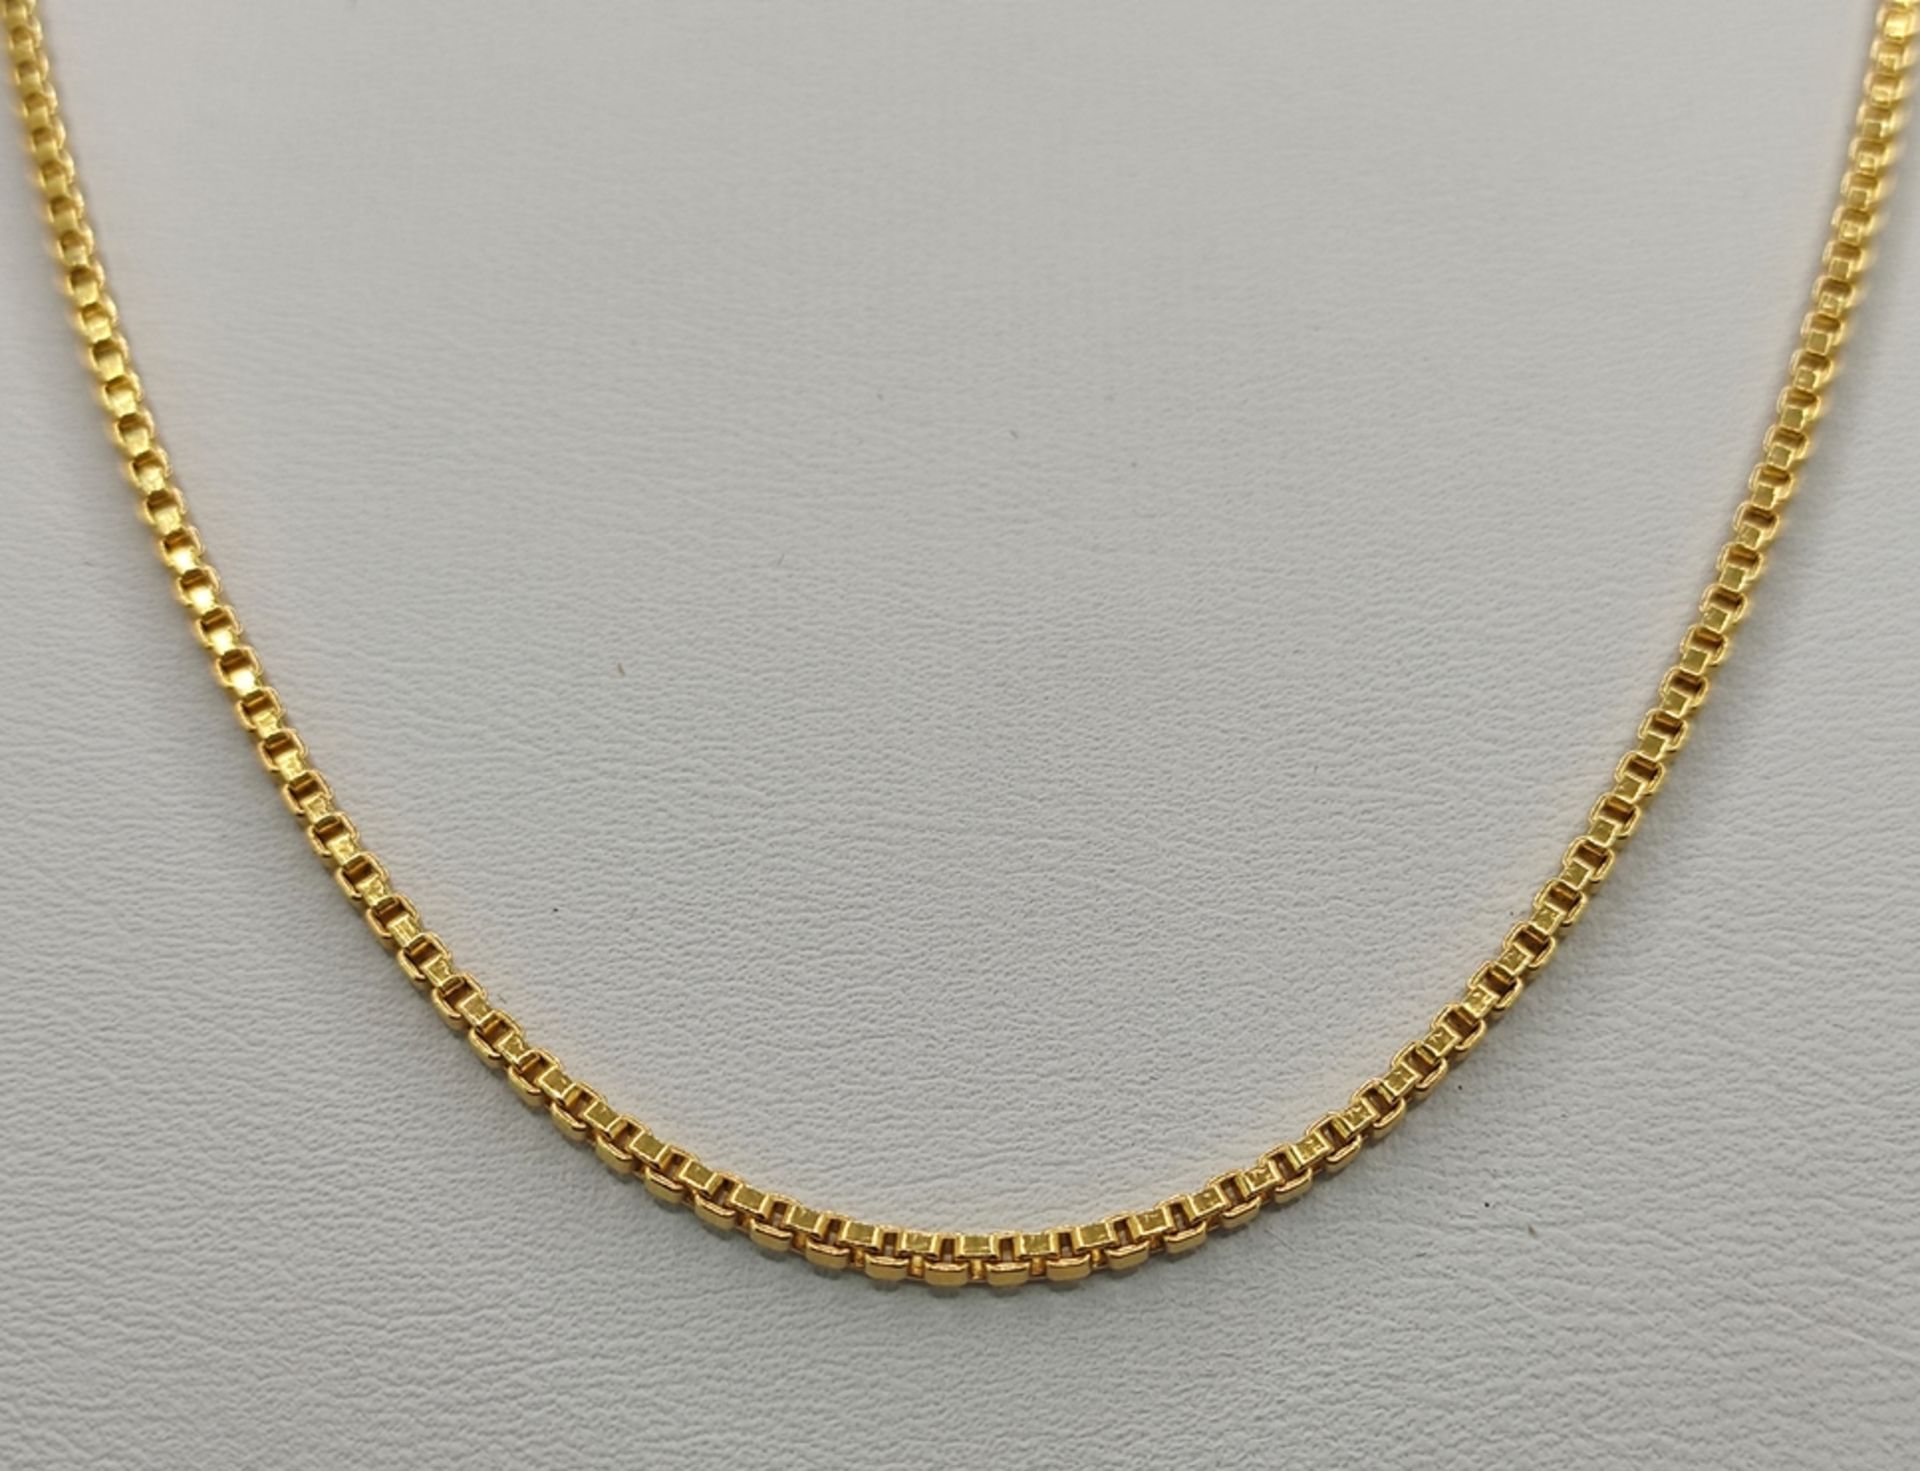 Venezianerkette, dünn, 750/18K Gelbgold, 14,72g, Länge 70cmVenetian chain, thin, 750/18K yellow